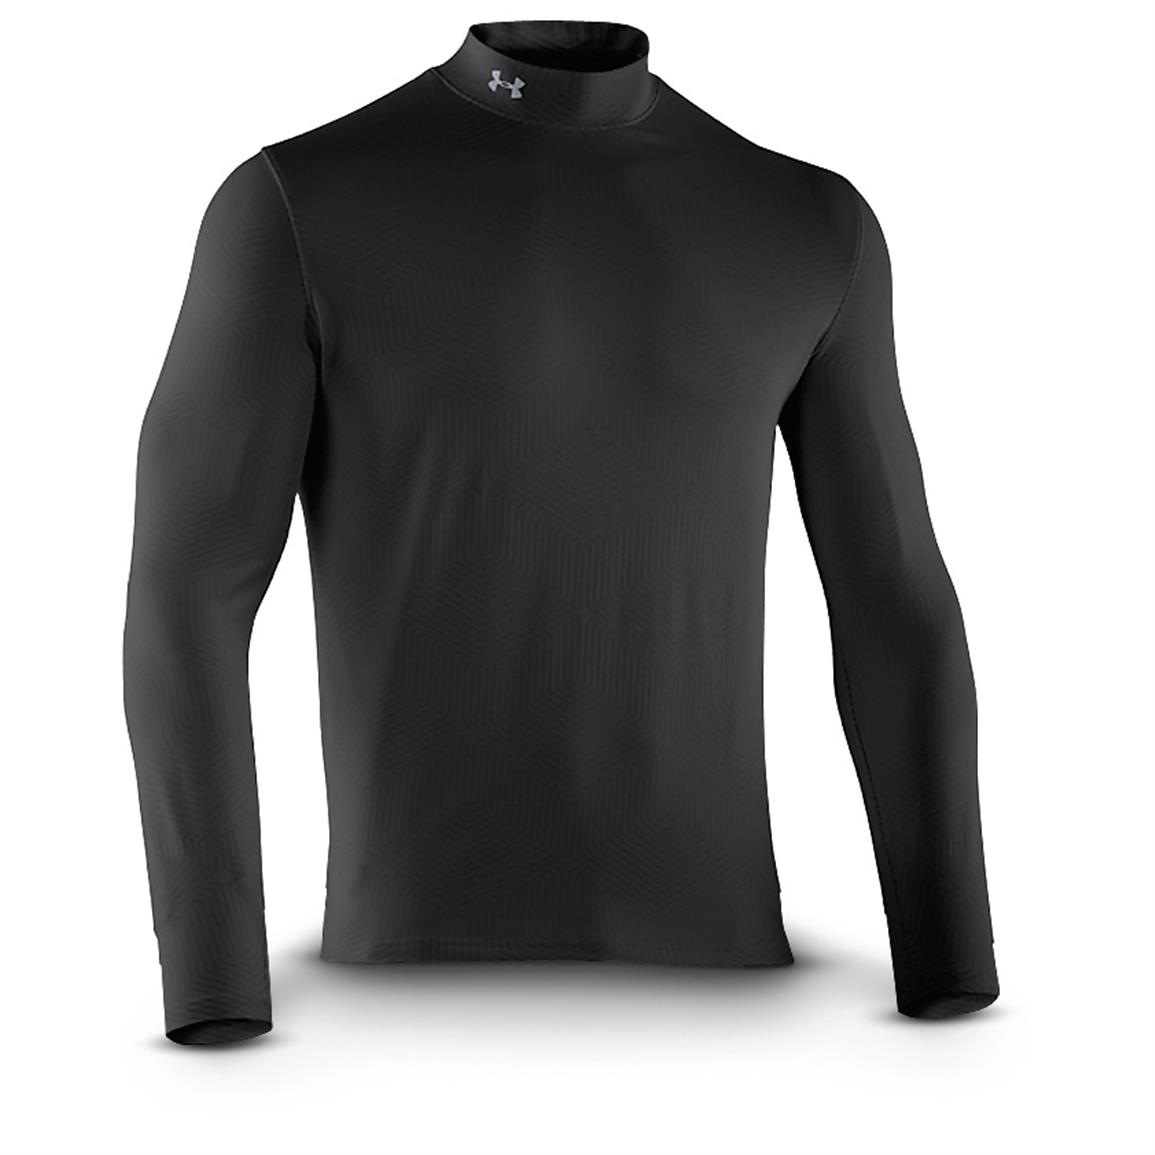 Under Armour Men's ColdGear Infrared EVO Mock Turtleneck Long Sleeve Shirt, Black / Steel